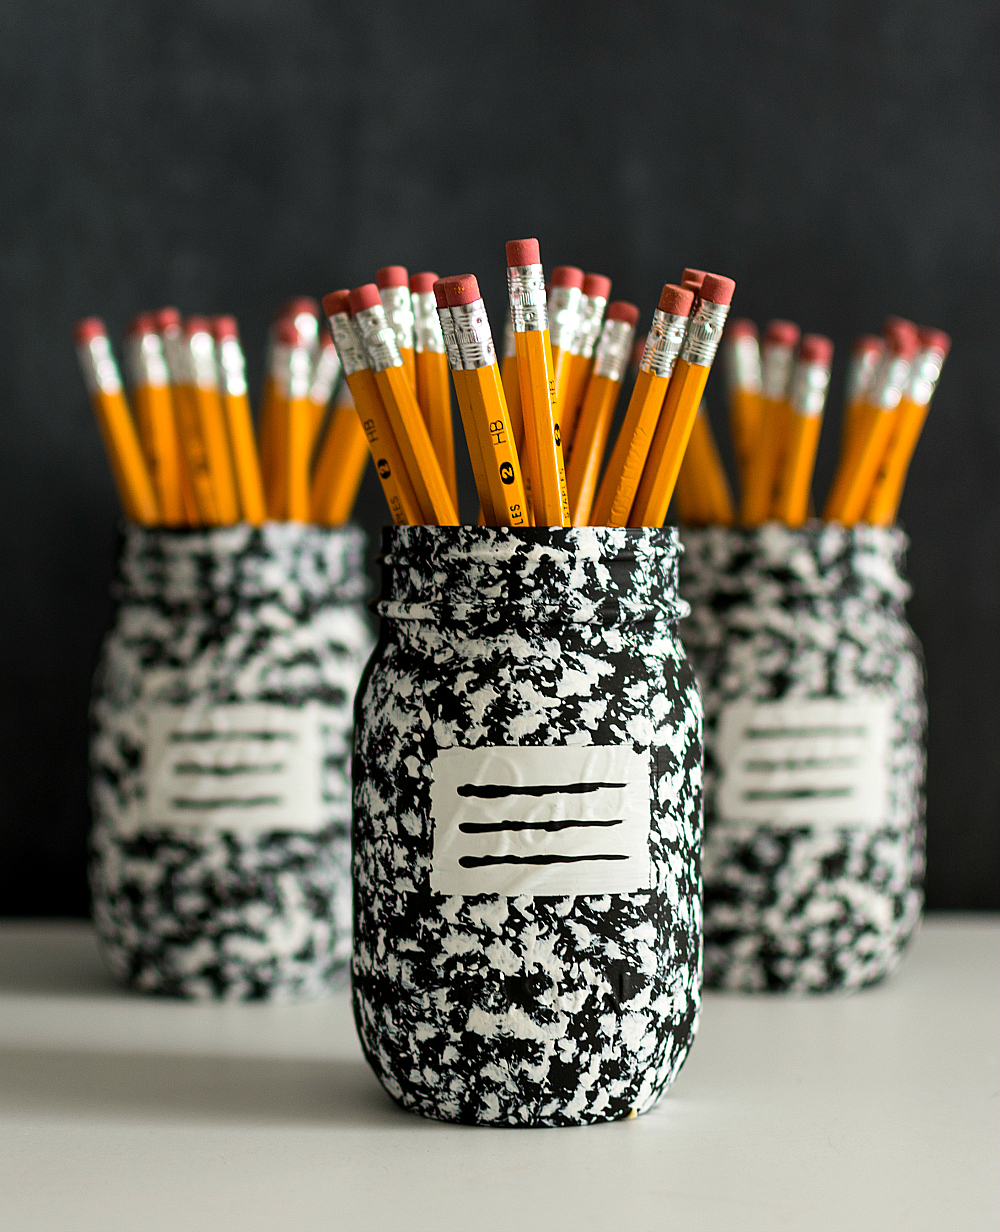 Desk Organizer Idea - Mason Jar Craft Ideas - Teacher Gifts